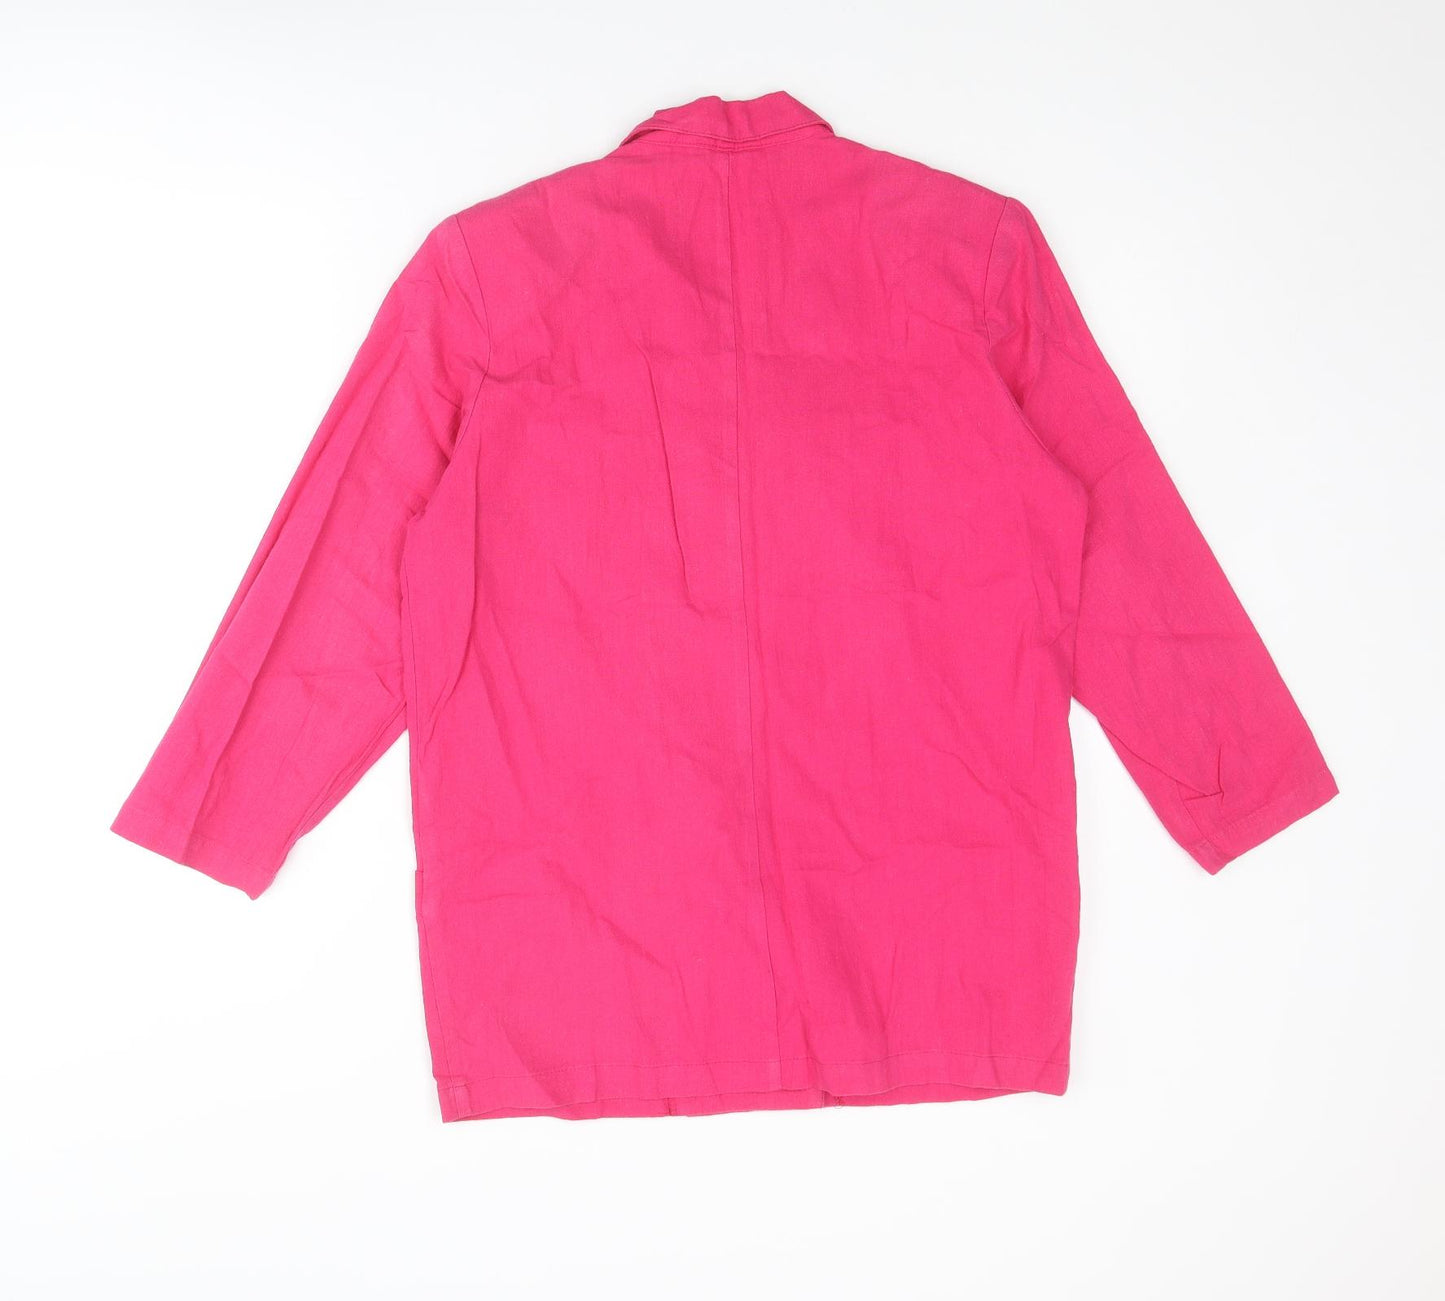 BHS Womens Pink Jacket Blazer Size 10 Button